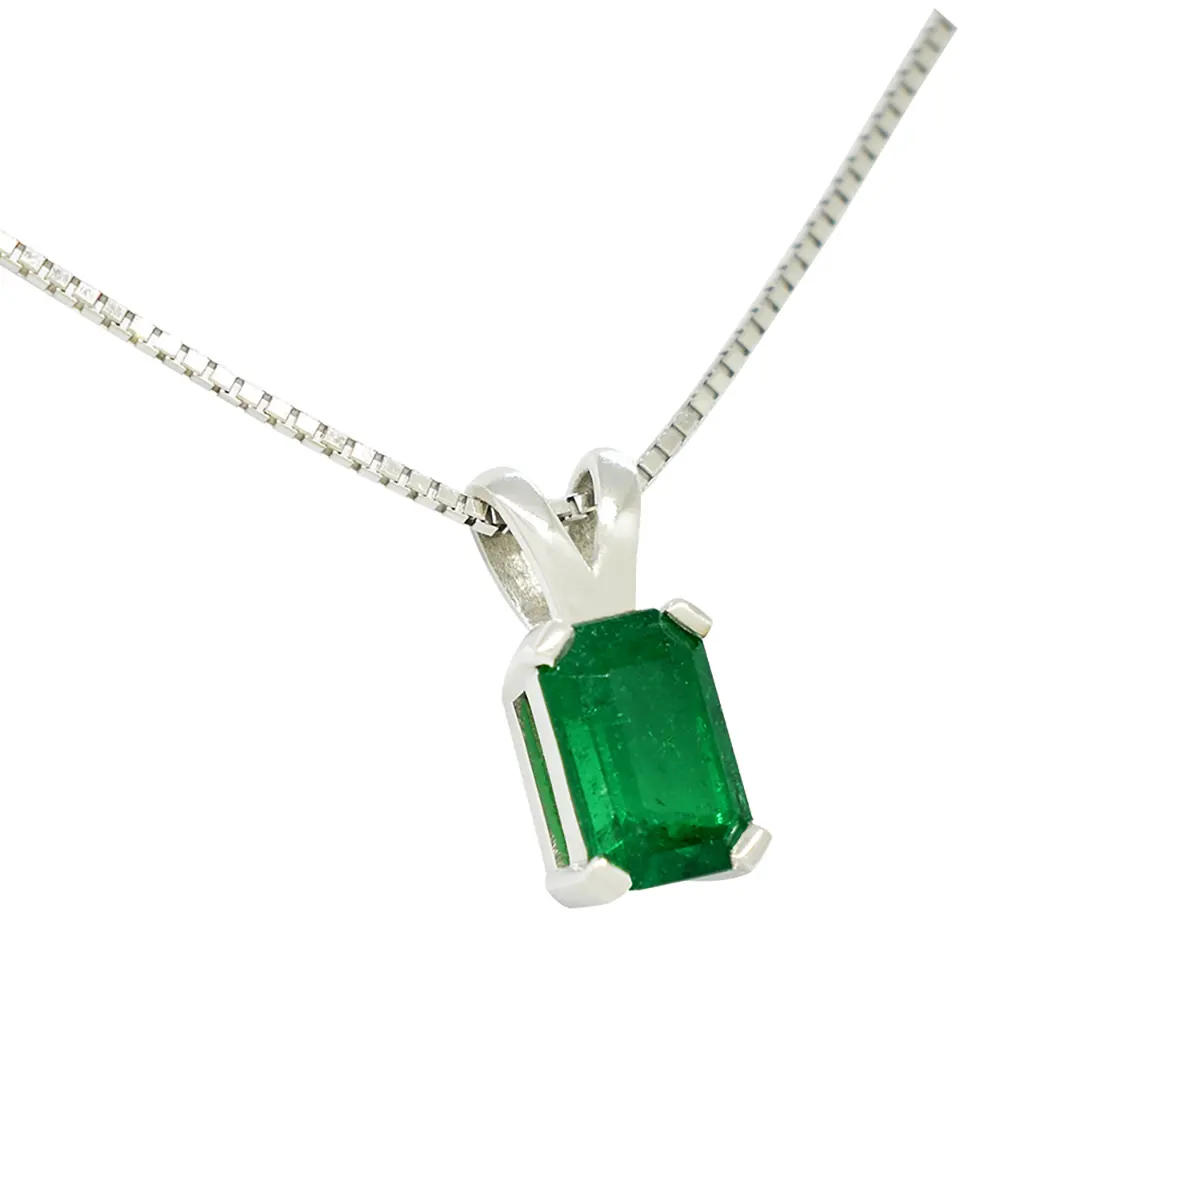 Emerald Cut Emerald Set in 18K White Gold Solitaire Pendant